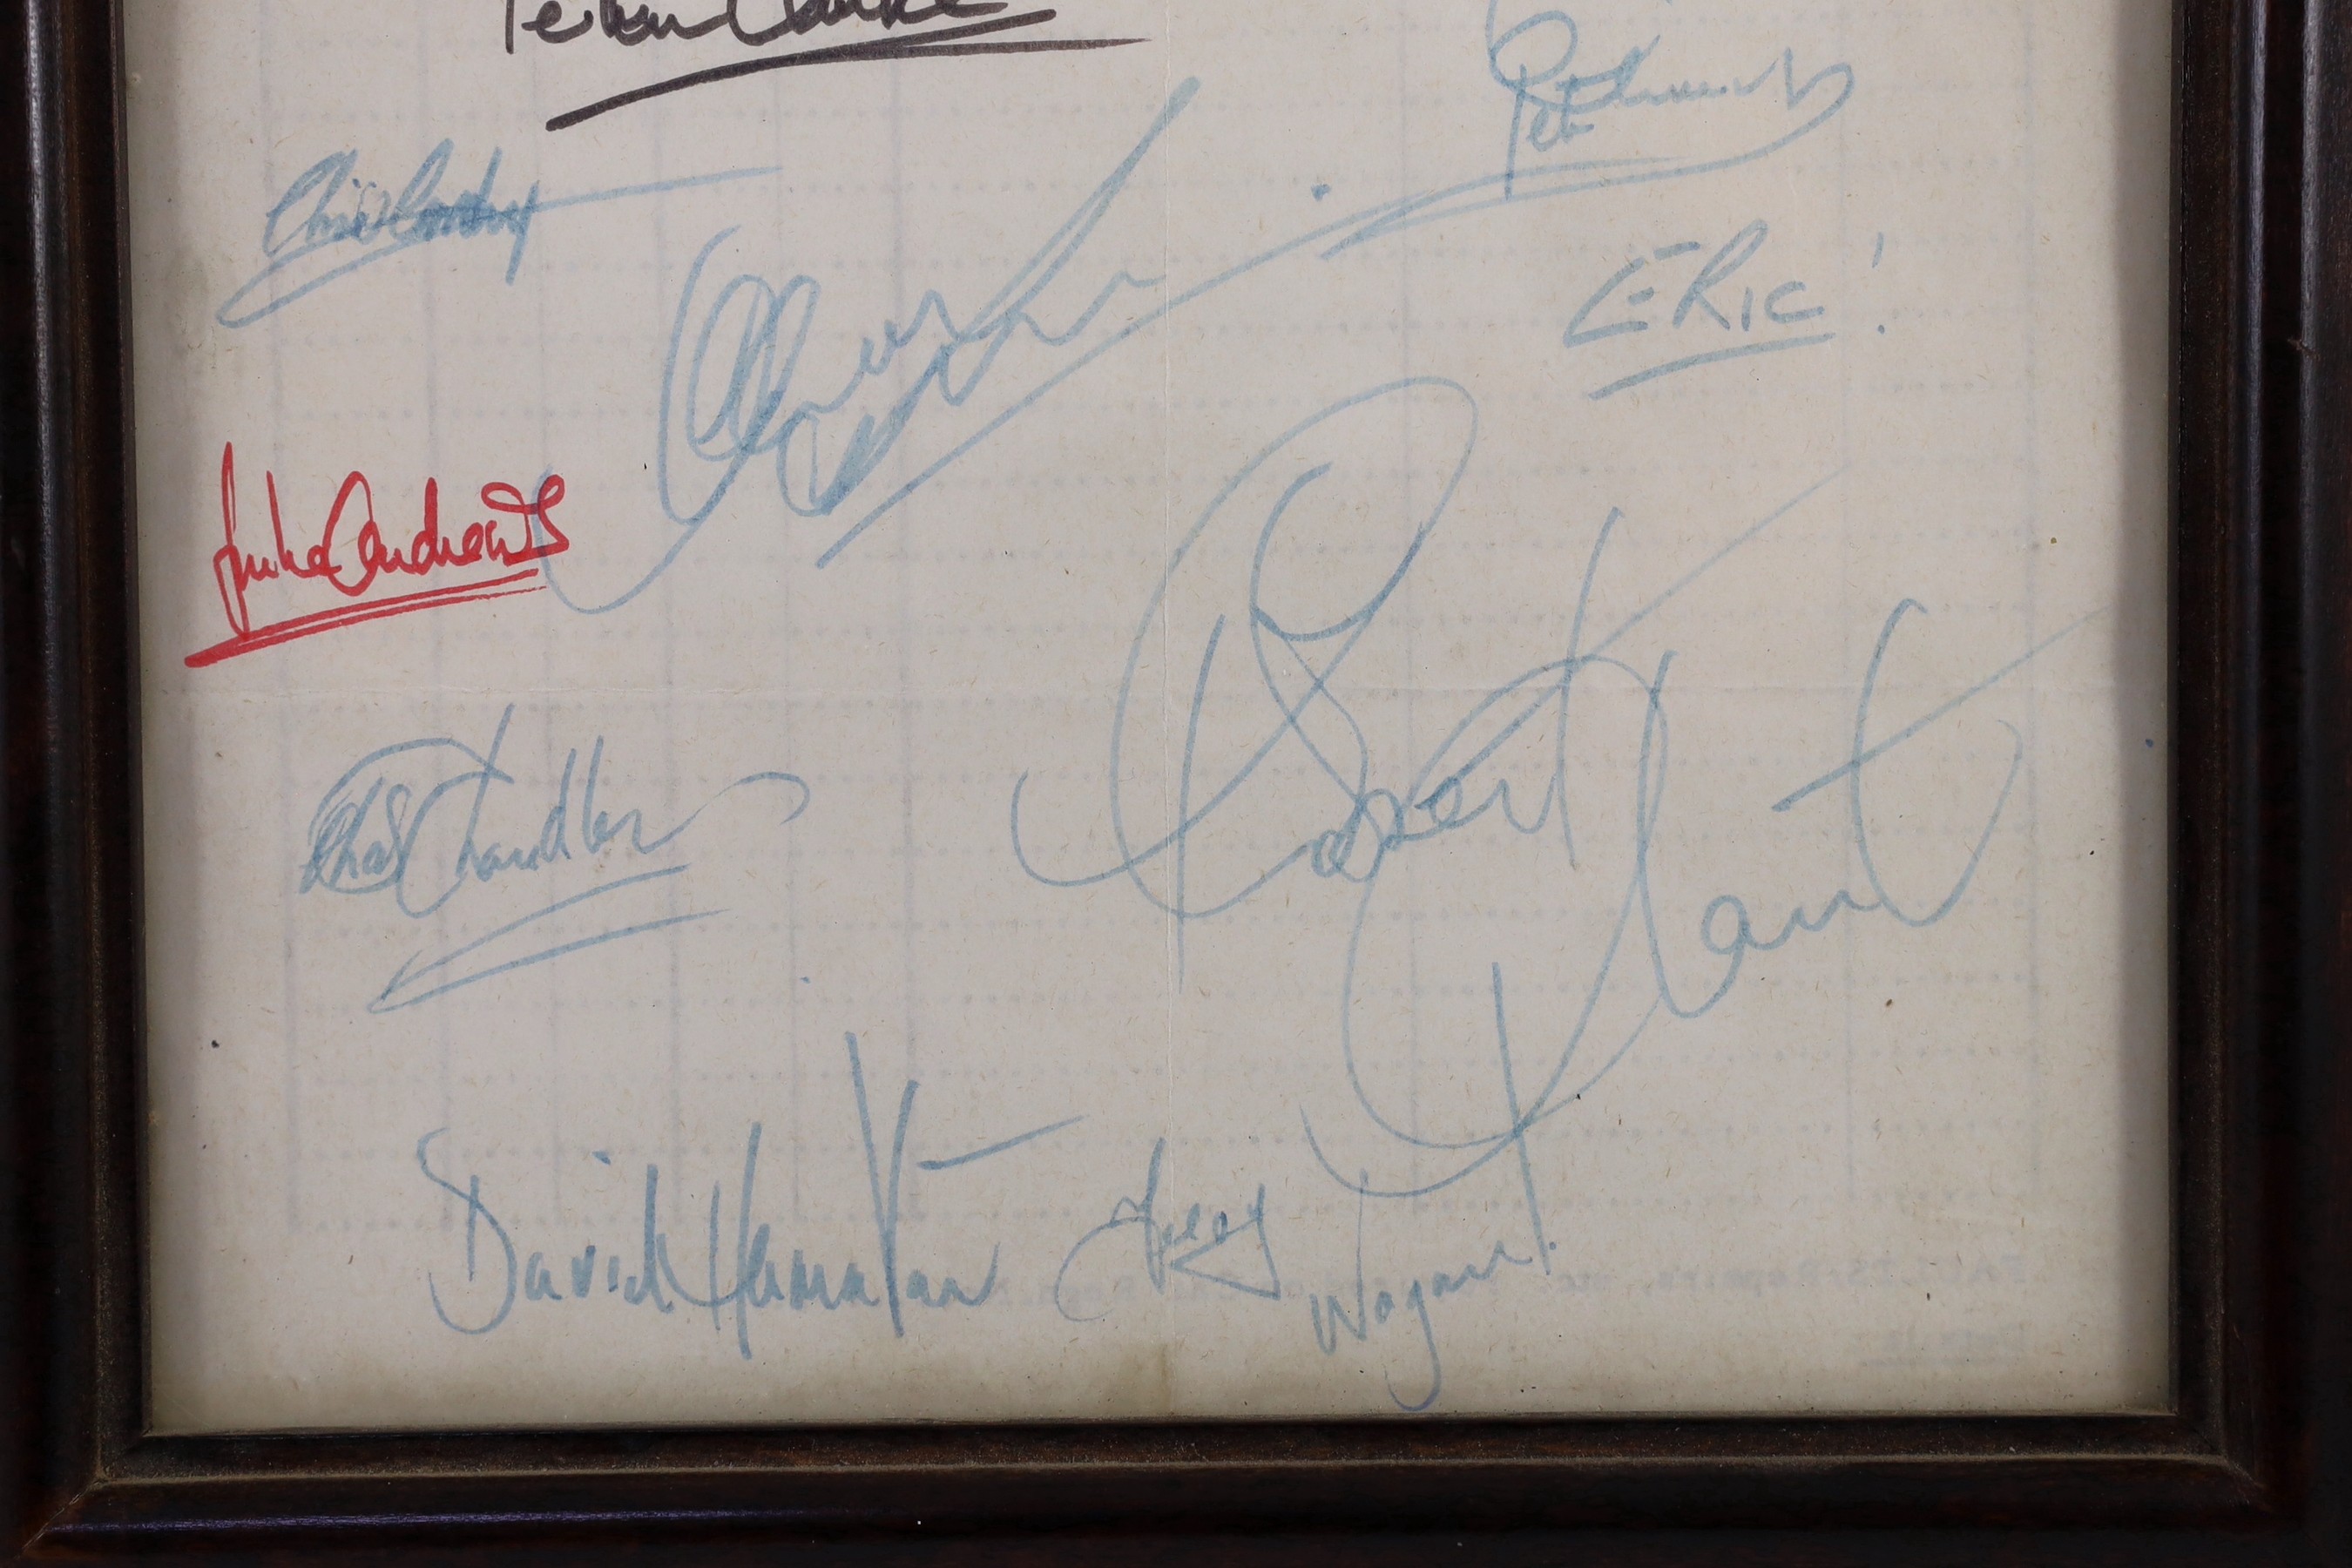 Framed autographs including Virginia Wade, Terry Wogan, Ernie Wise, Eric Morecambe John McEnroe, Julie Andrews etc., 20 cms wide x 28.5 cms high